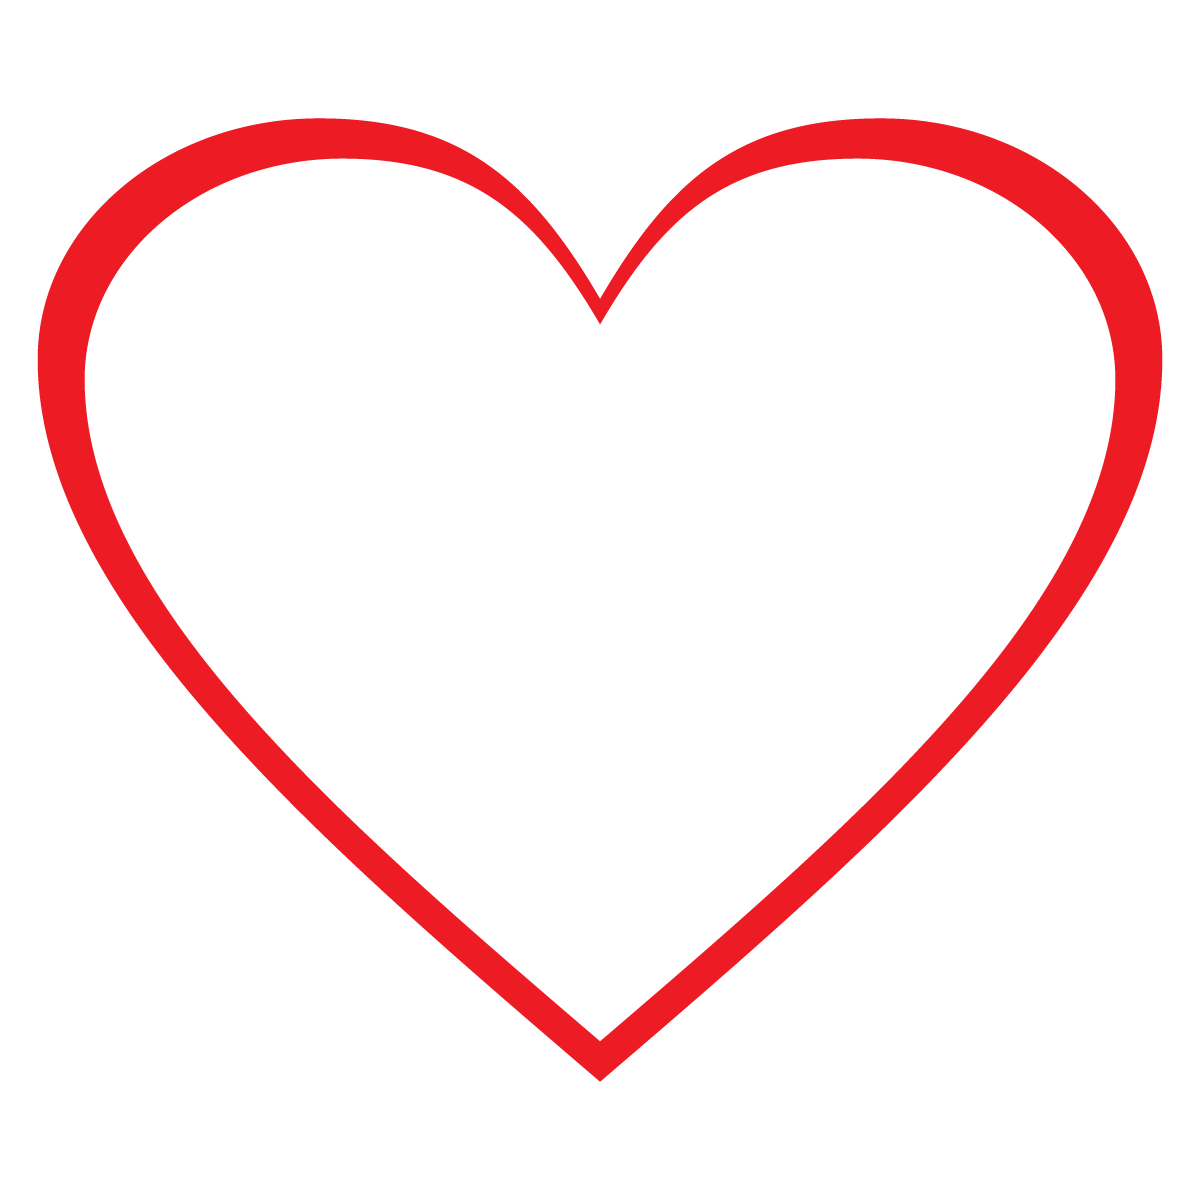 Hearts free heart clip art animations danasrhp top - Clipartix